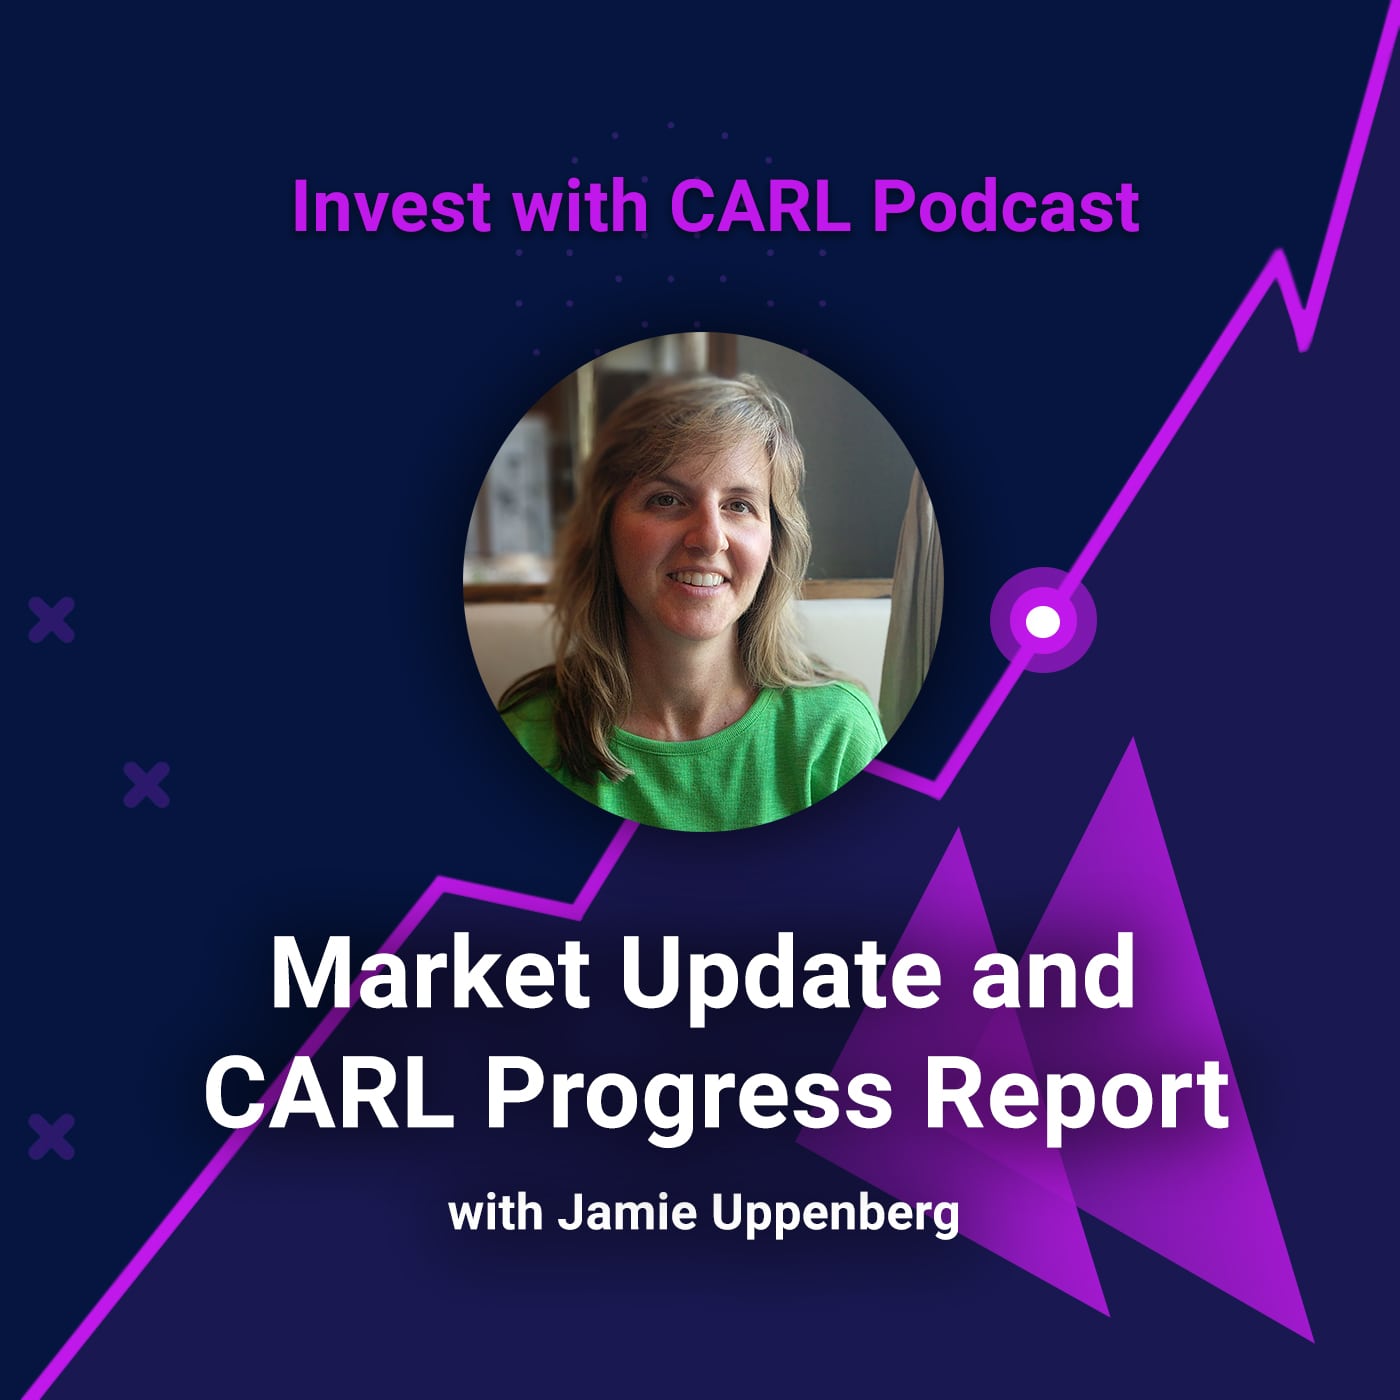 Market Update and CARL Progress Report